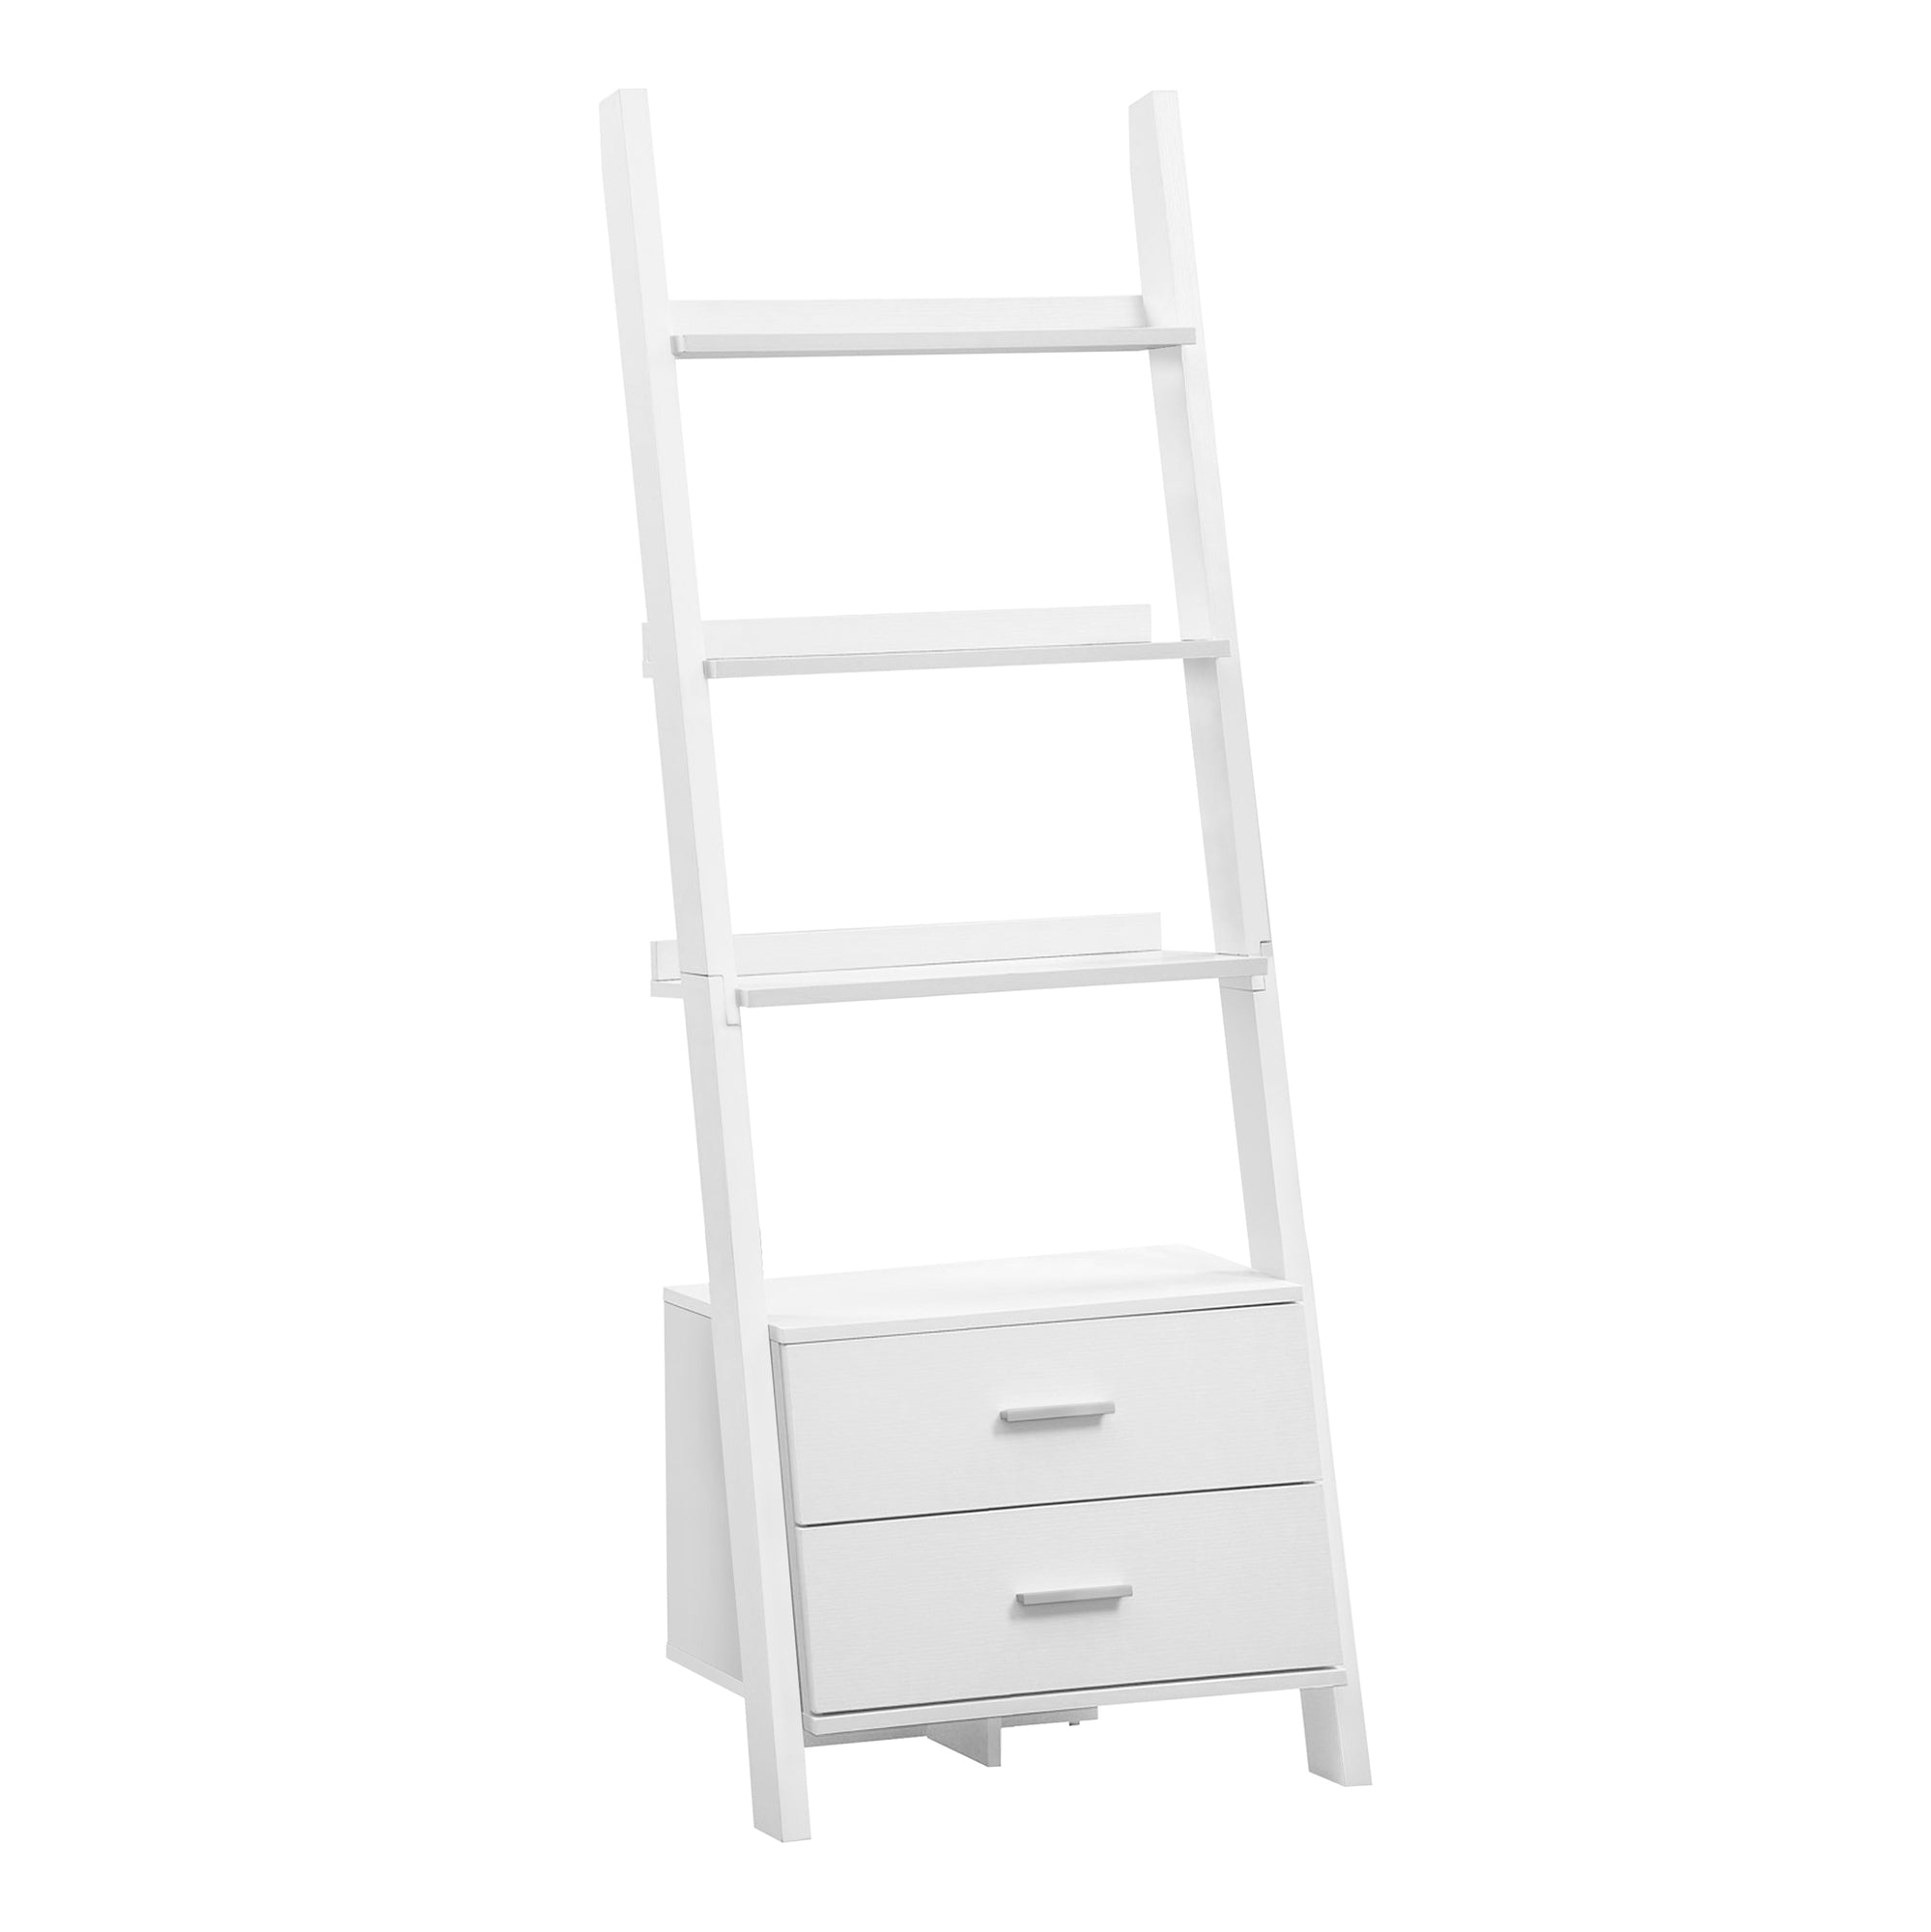 MN-612562    Bookshelf, Bookcase, Etagere, Ladder, 4 Tier, 69"H, Office, Bedroom, Laminate, White, Contemporary, Modern